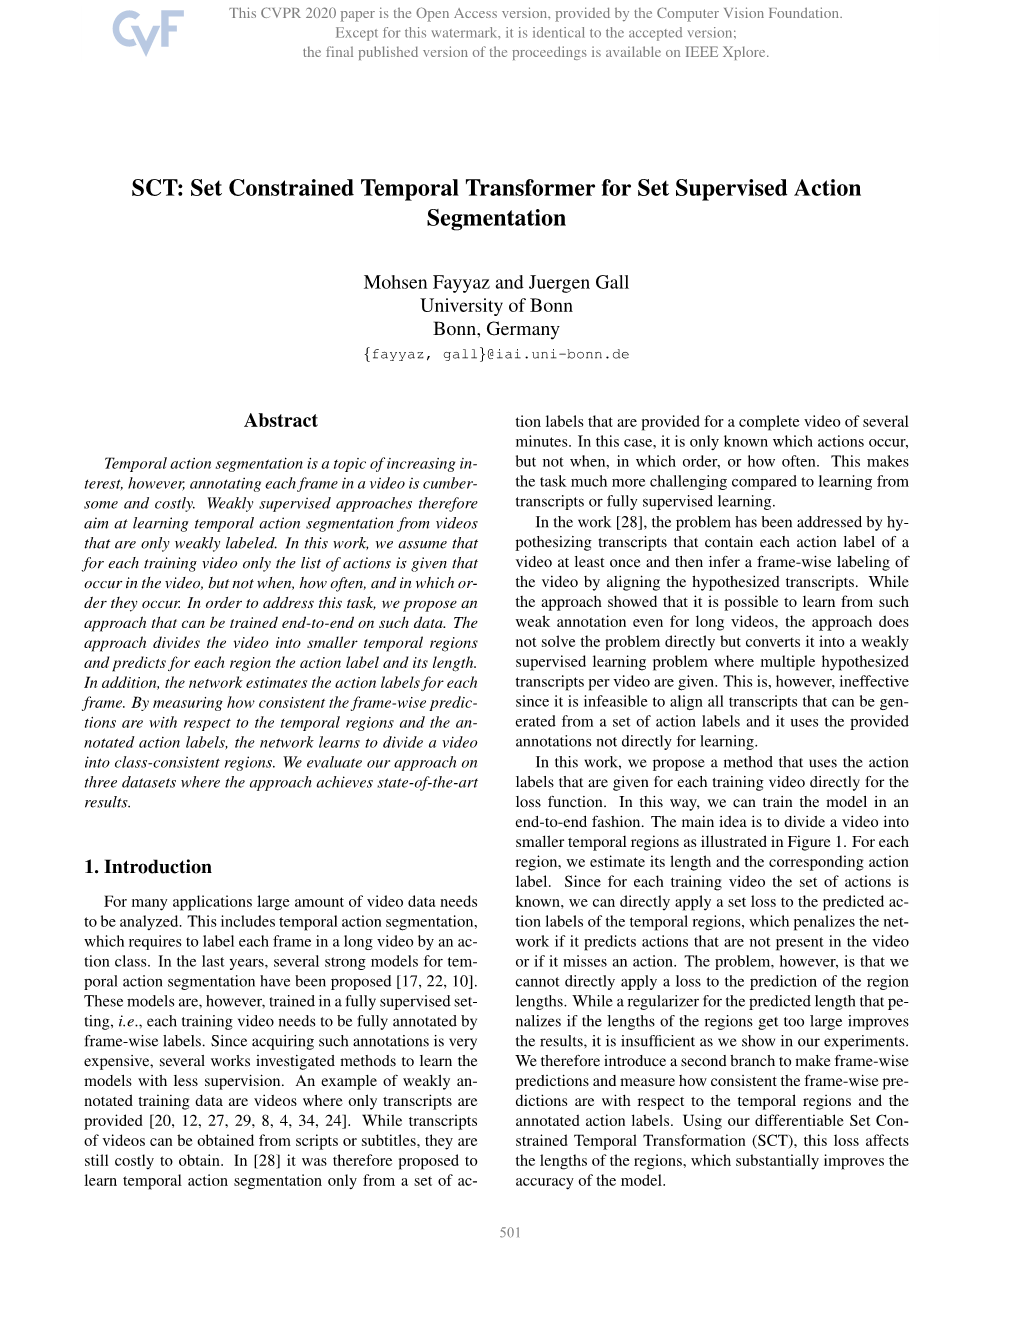 SCT: Set Constrained Temporal Transformer for Set Supervised Action Segmentation